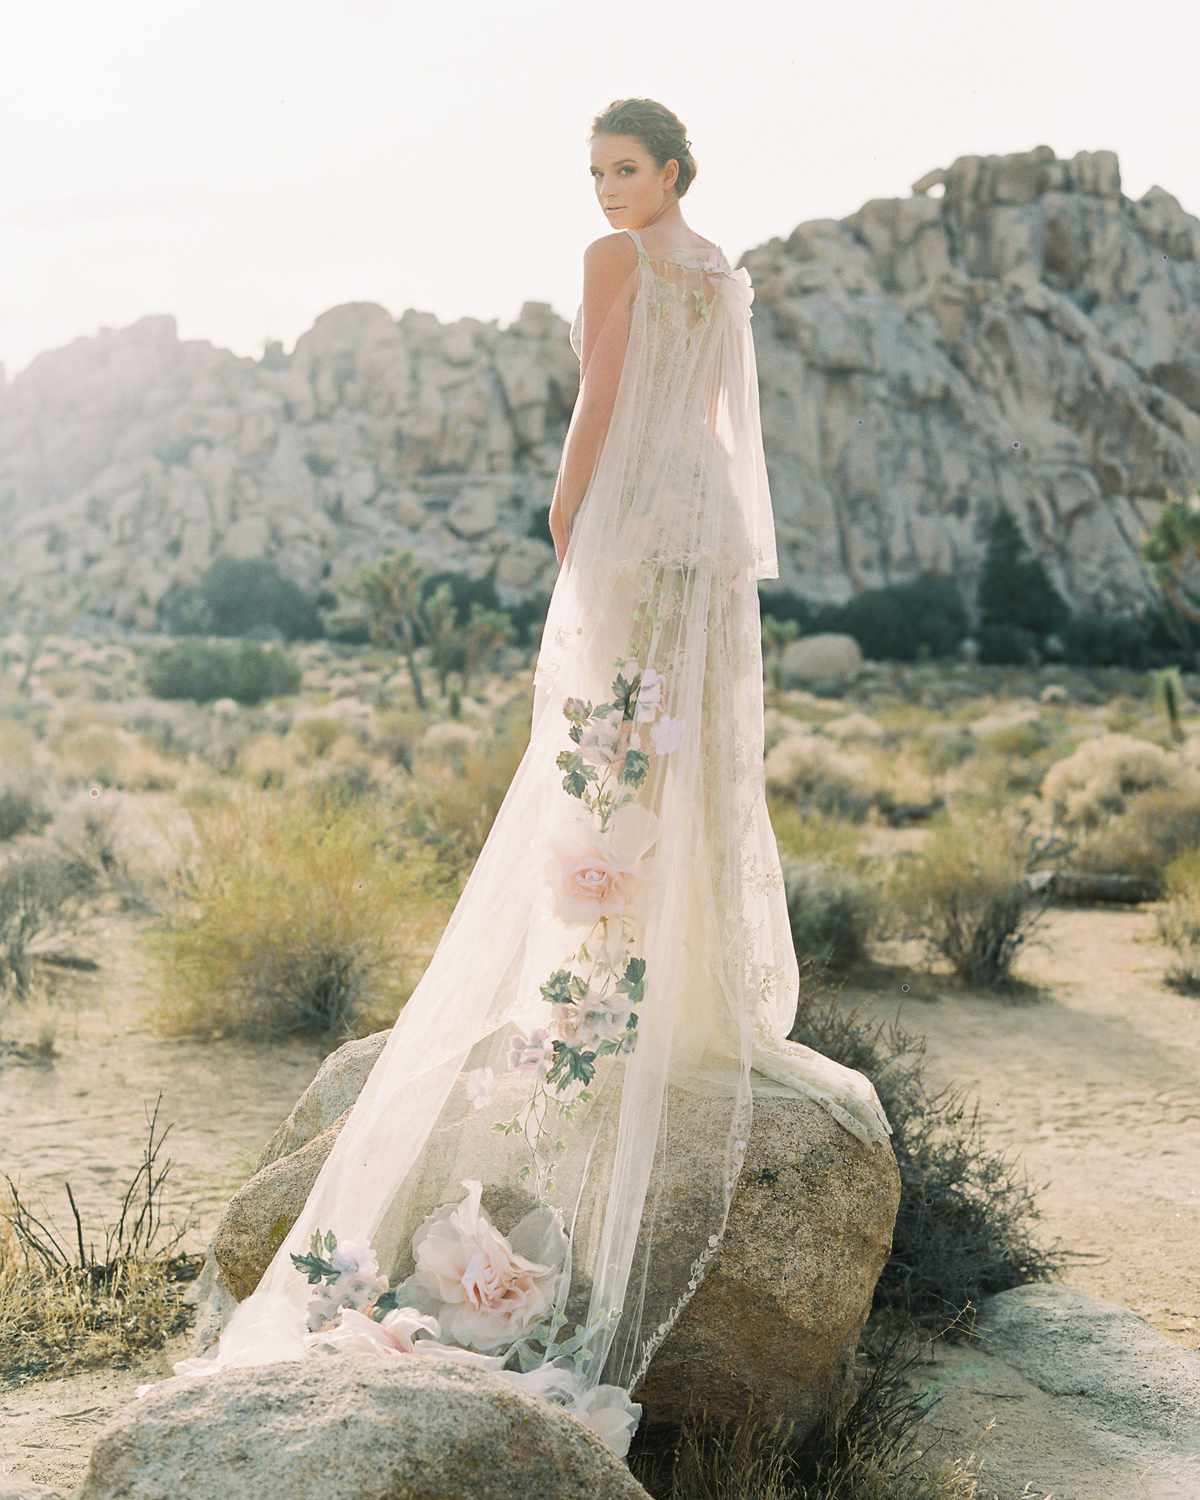 bride wearing long train lace wedding dress outside standing on rock with flowers